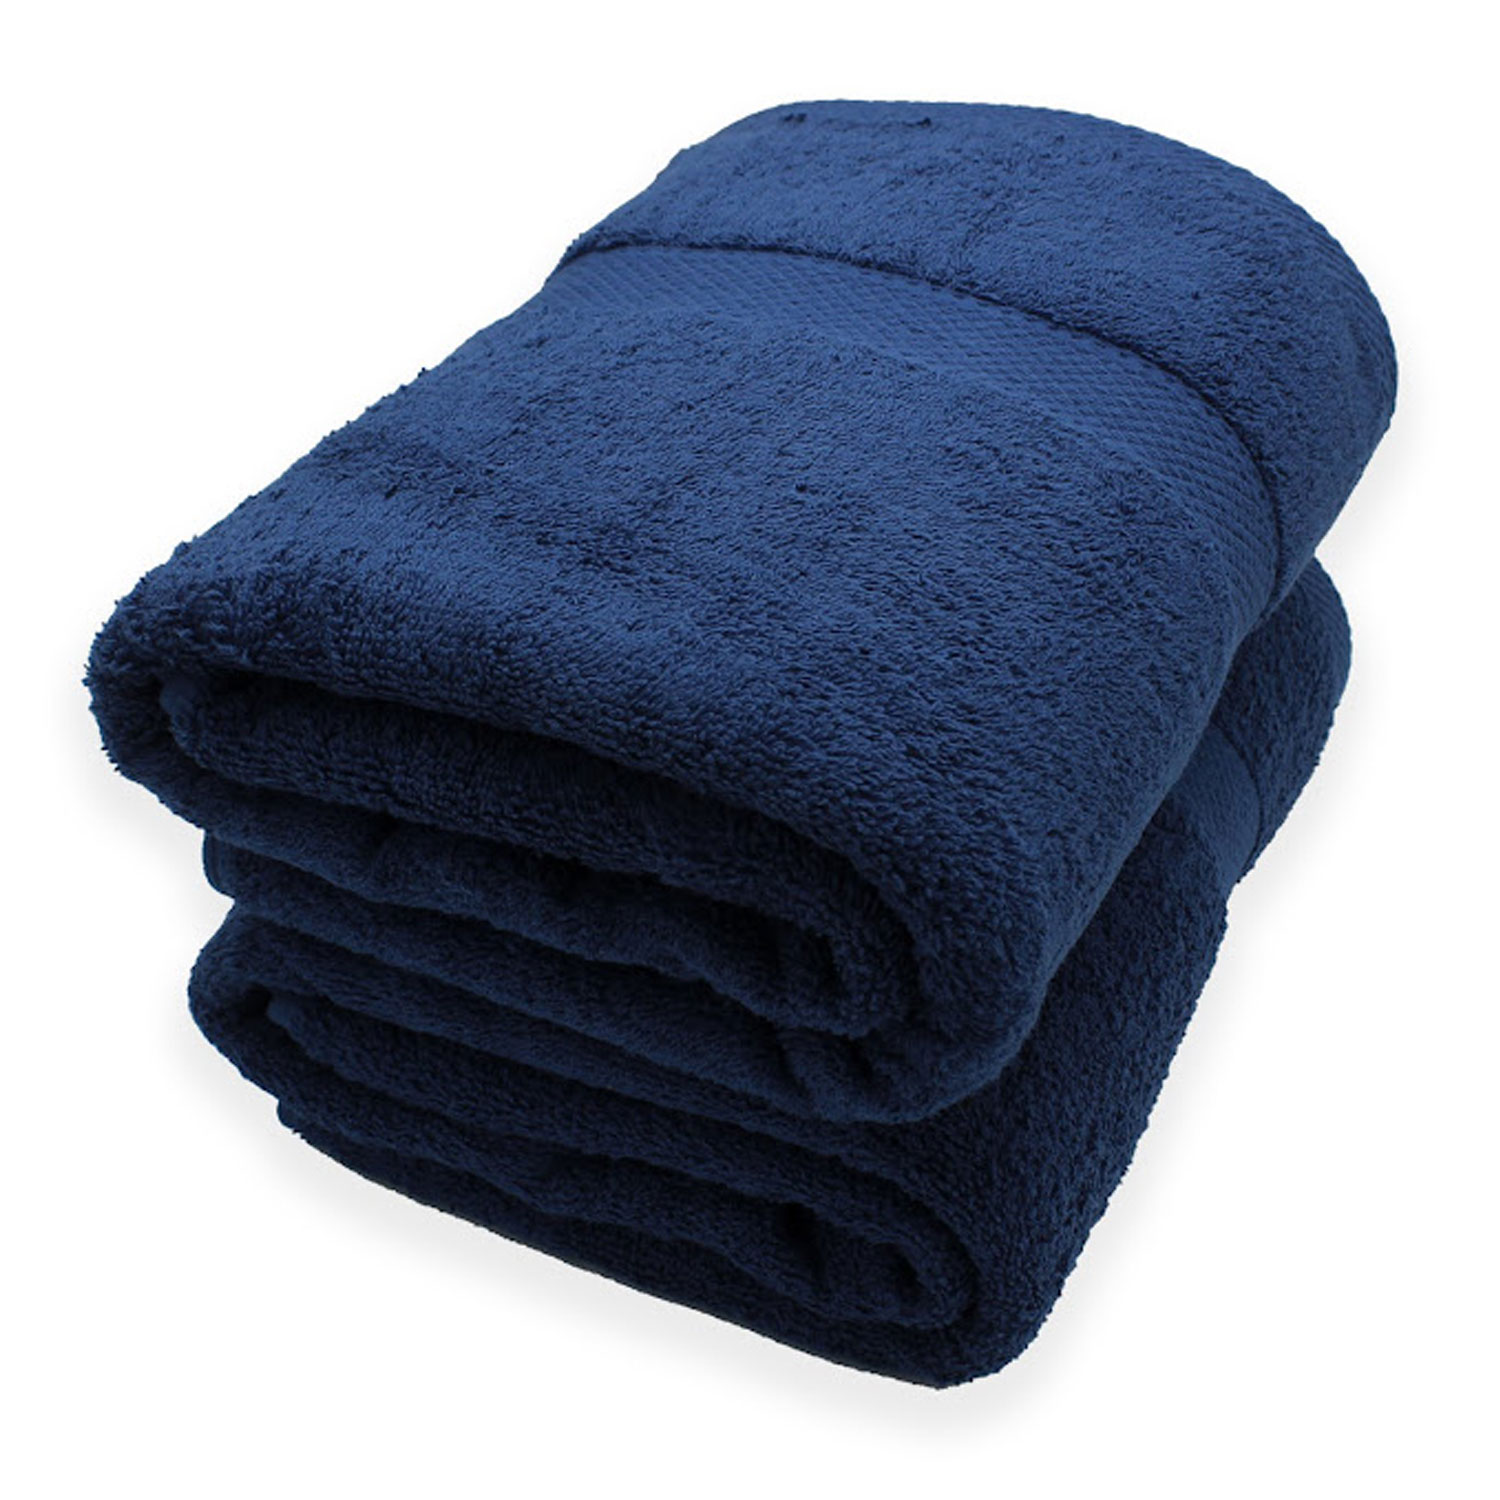 100% Cotton Egyptian Bath Sheet Towel Pack of 2